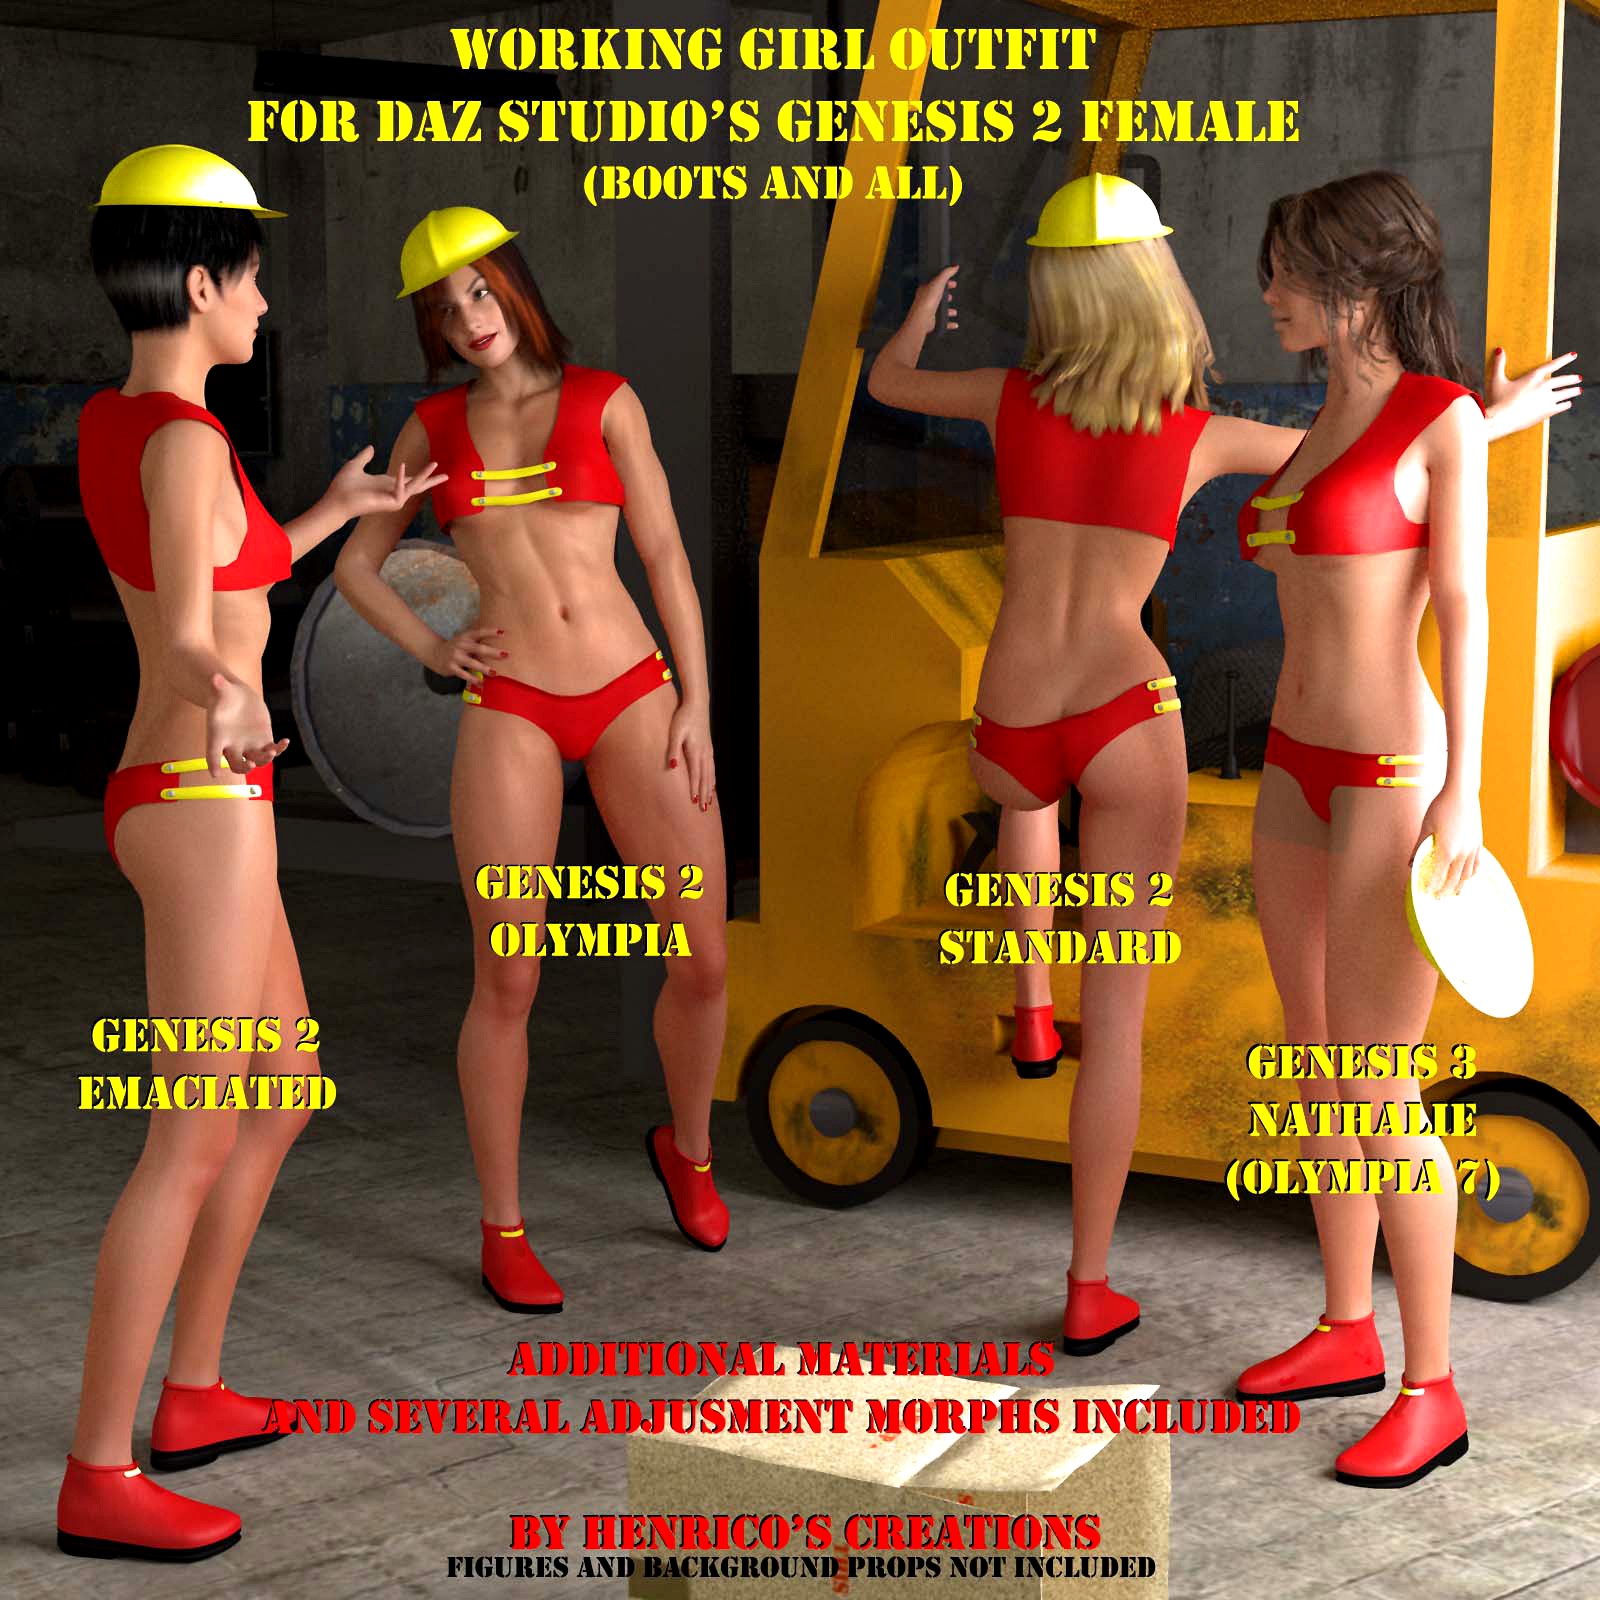 Working Girl outfit for Genesis 2 Female, DAZ Studio